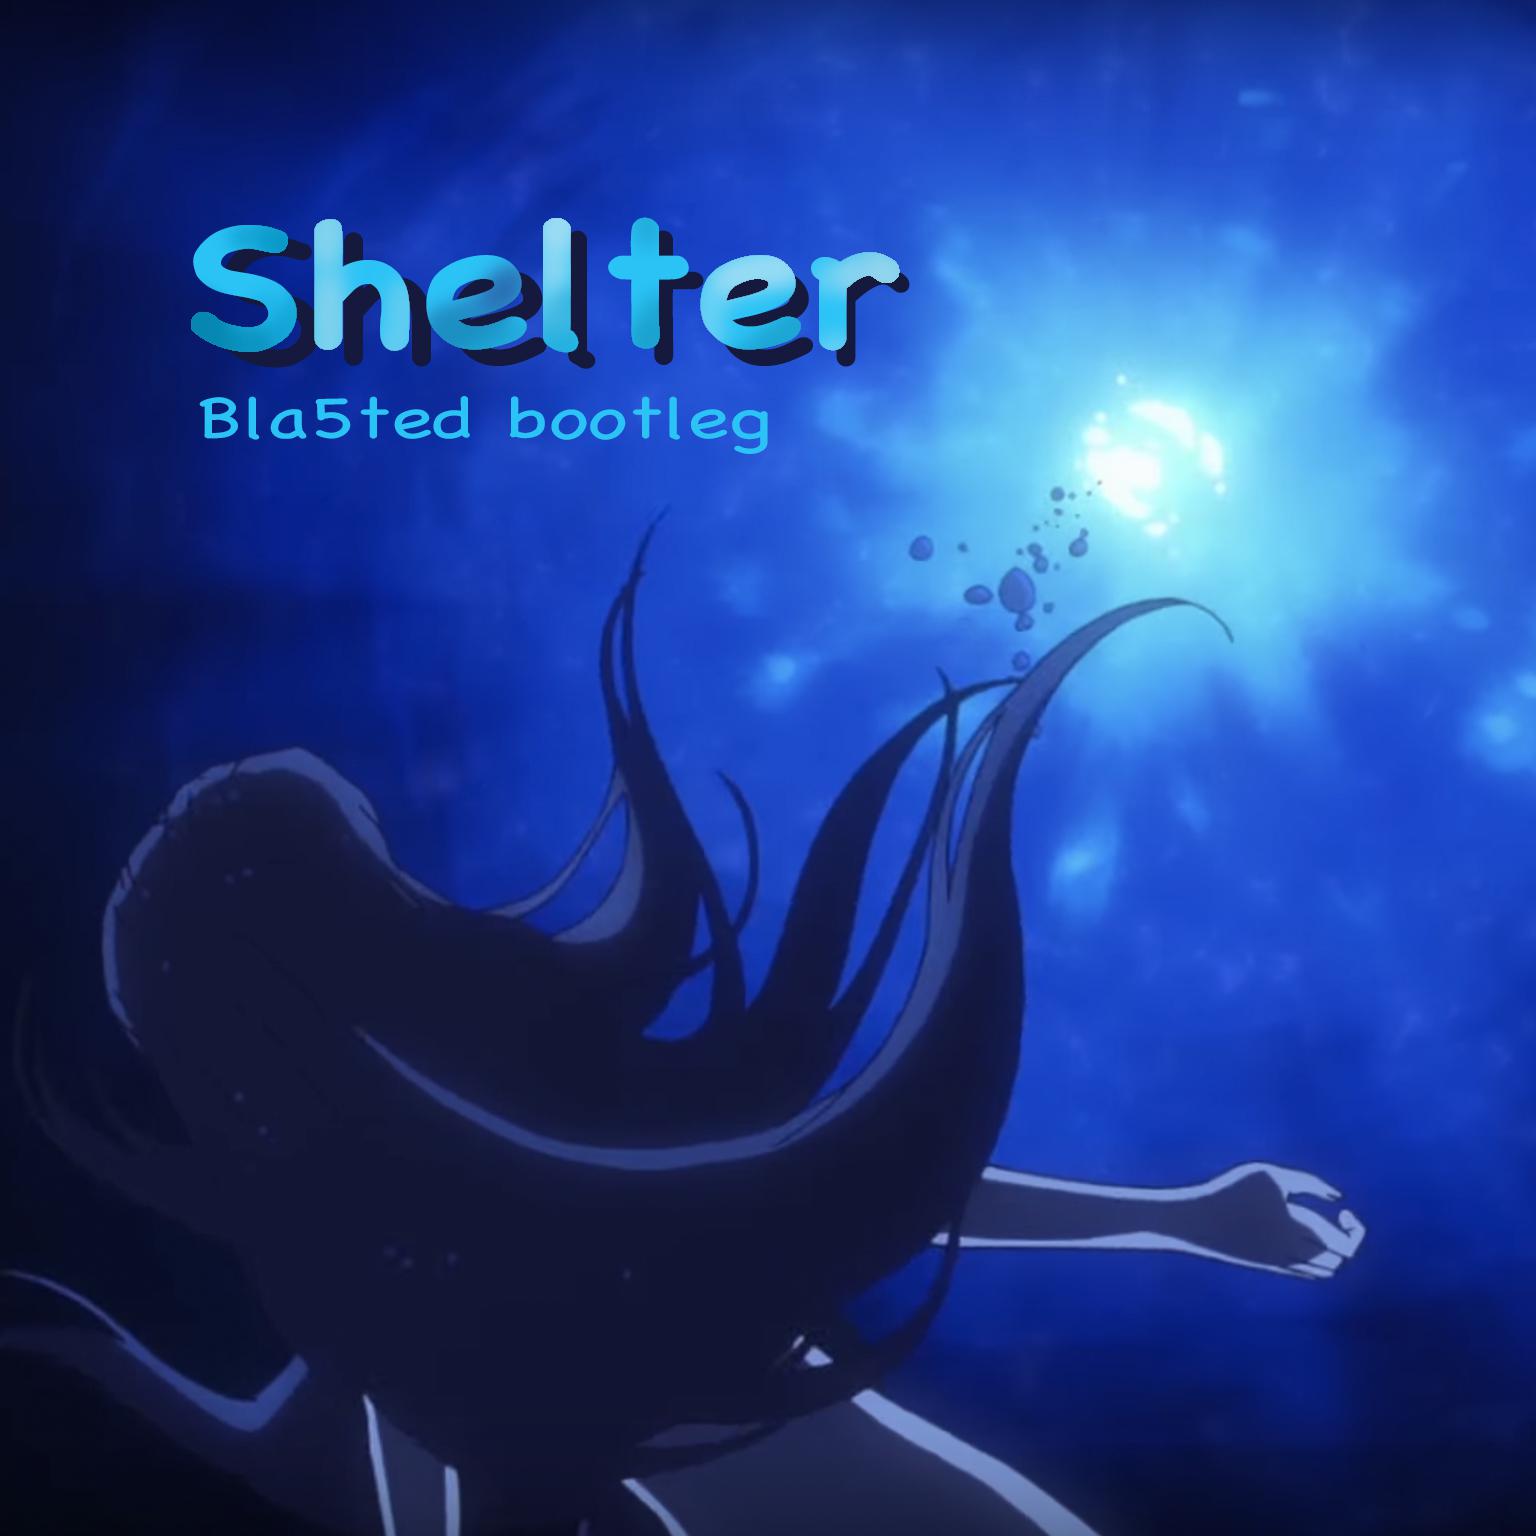 Shelter Bla5ted  bootleg